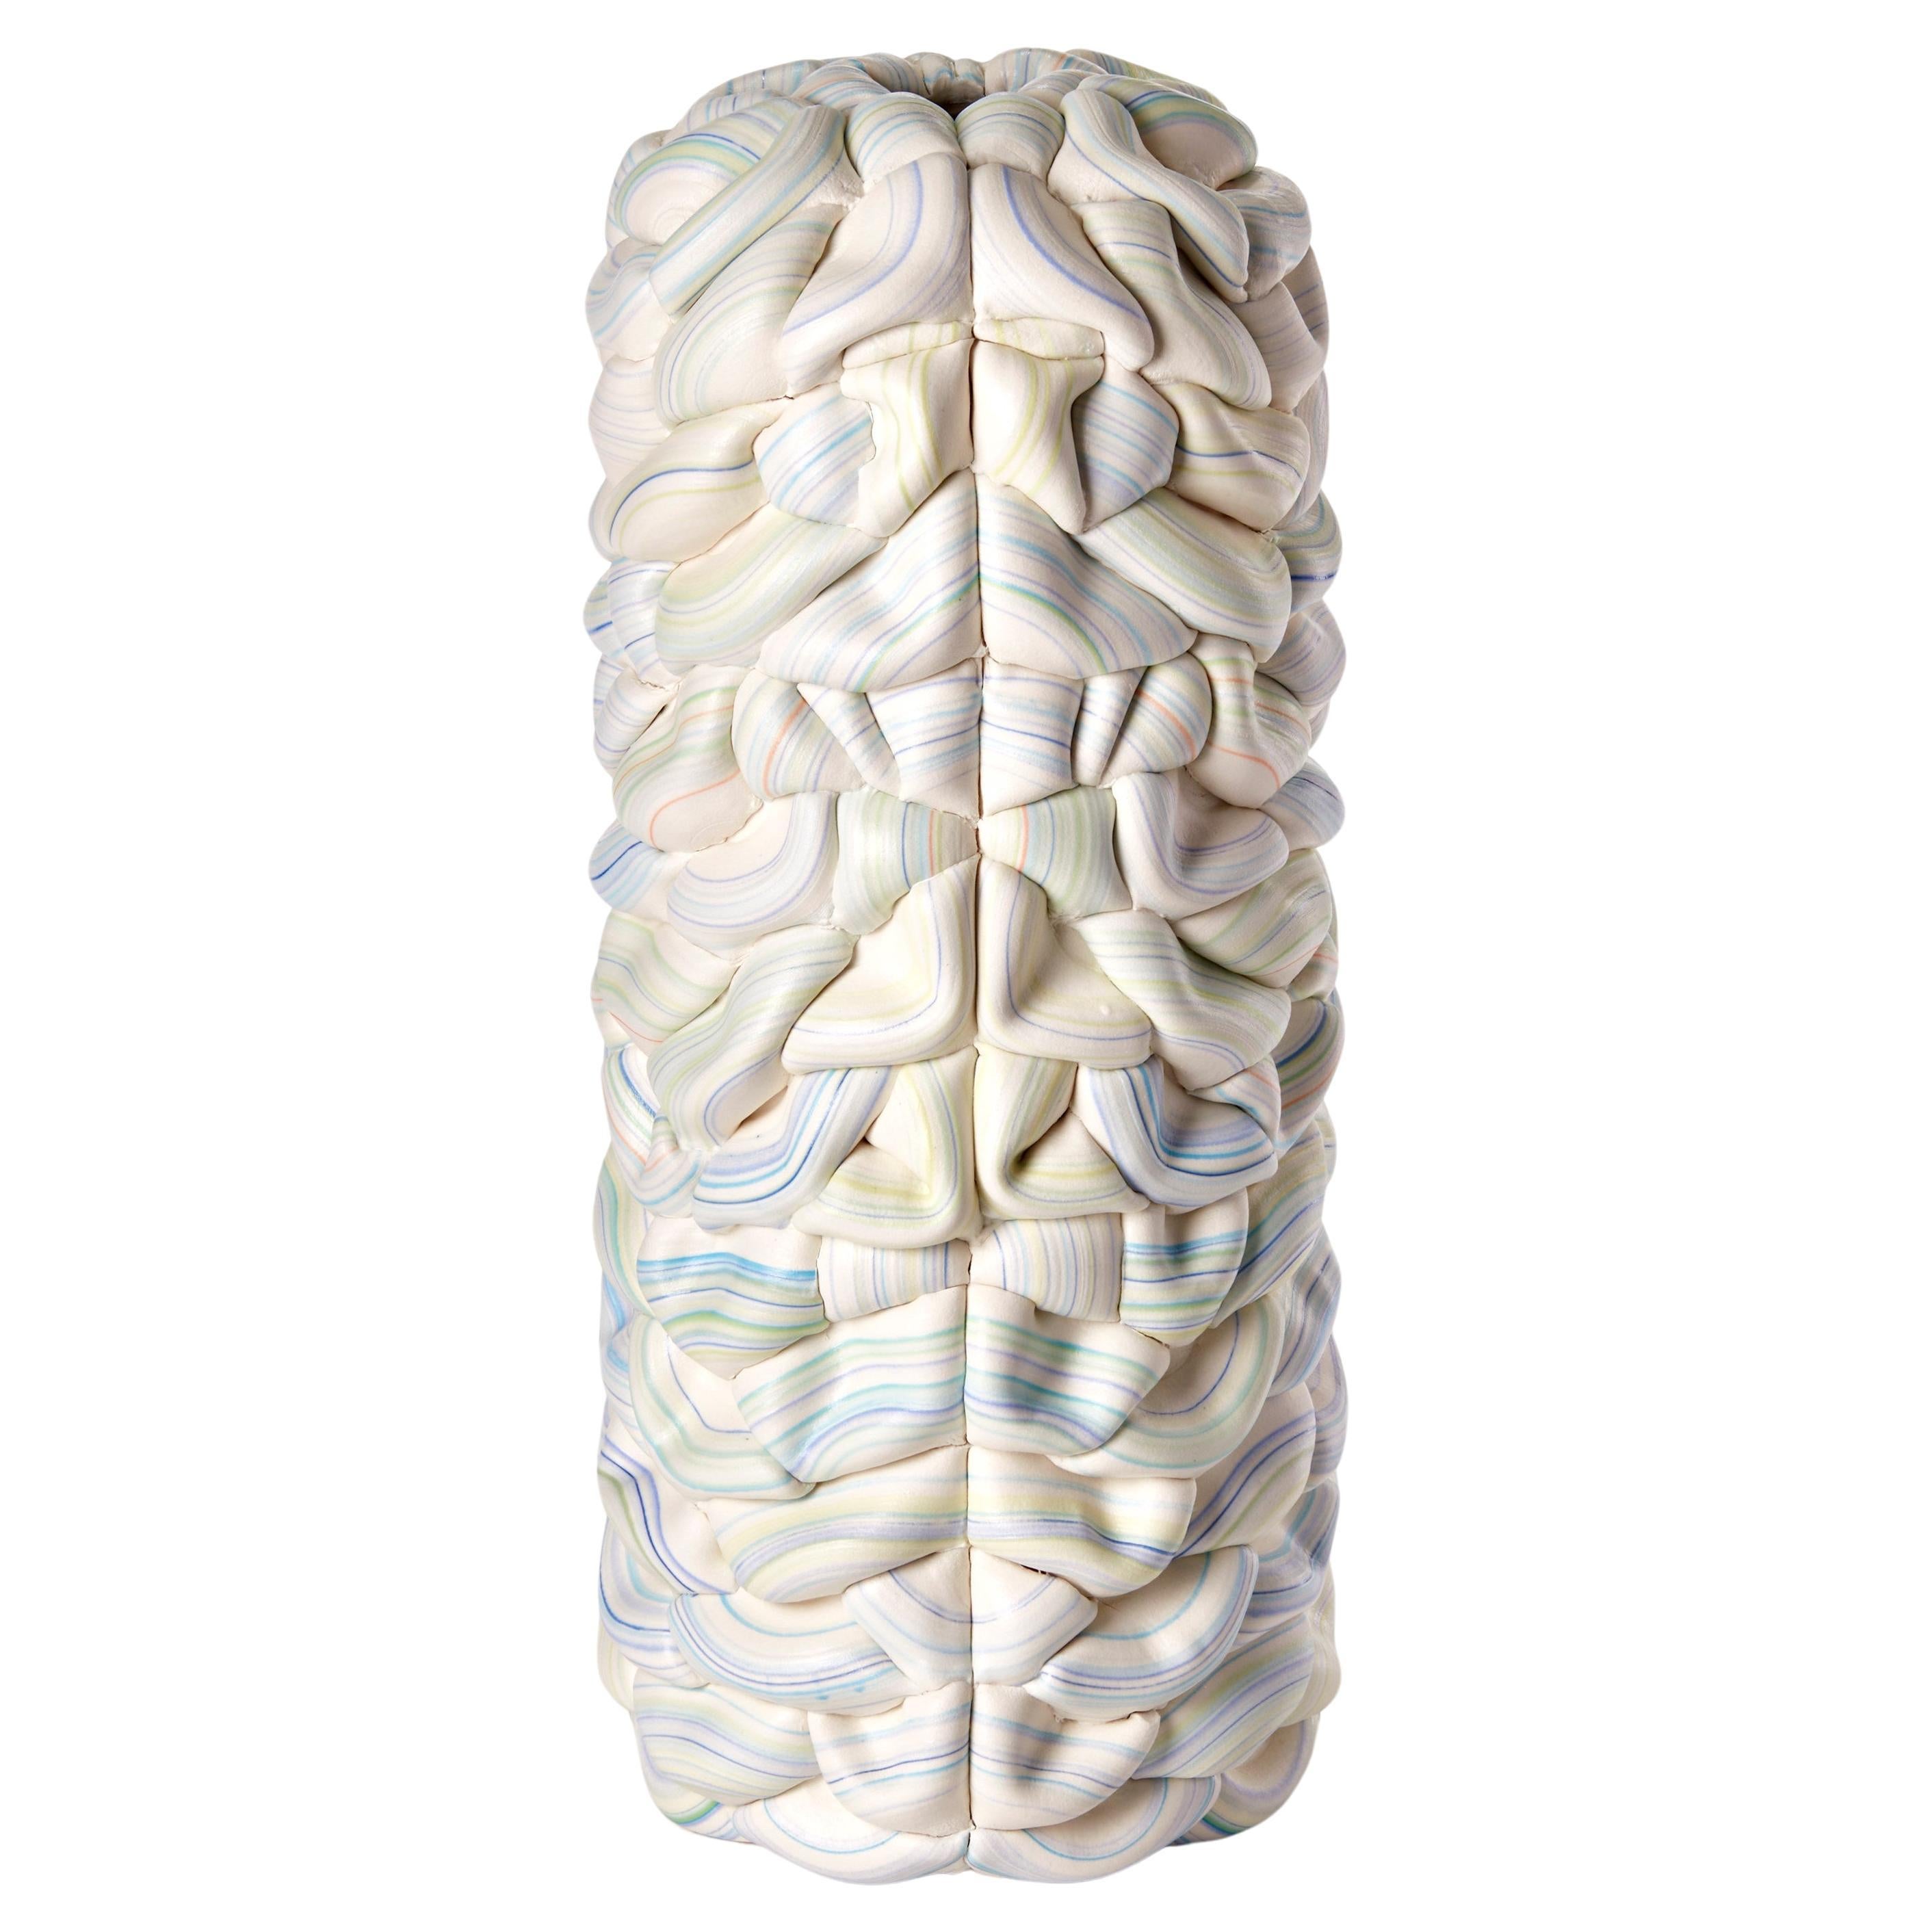 Striped Symmetry Fold VI, white, blue & yellow ceramic vessel by Steven Edwards For Sale